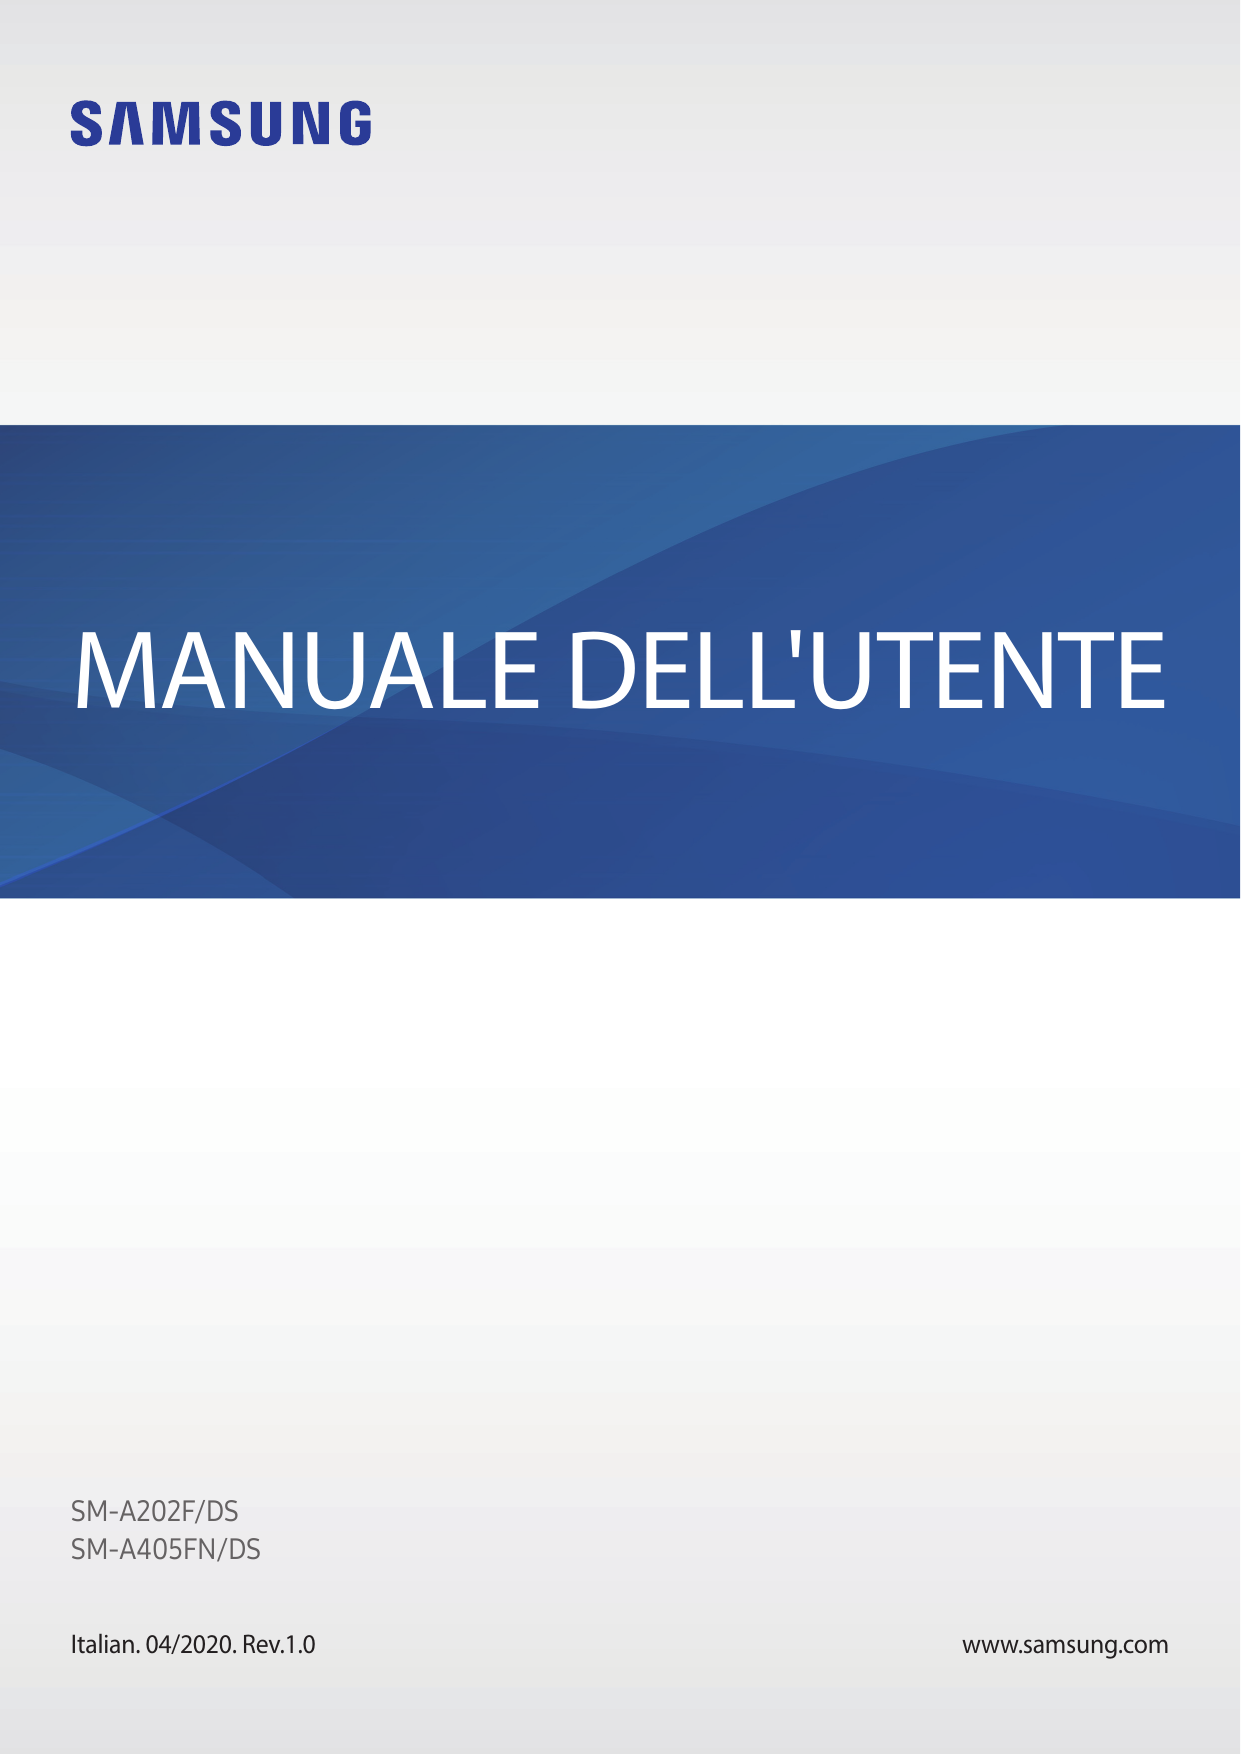 MANUALE DELL'UTENTESM-A202F/DSSM-A405FN/DSItalian. 04/2020. Rev.1.0www.samsung.com